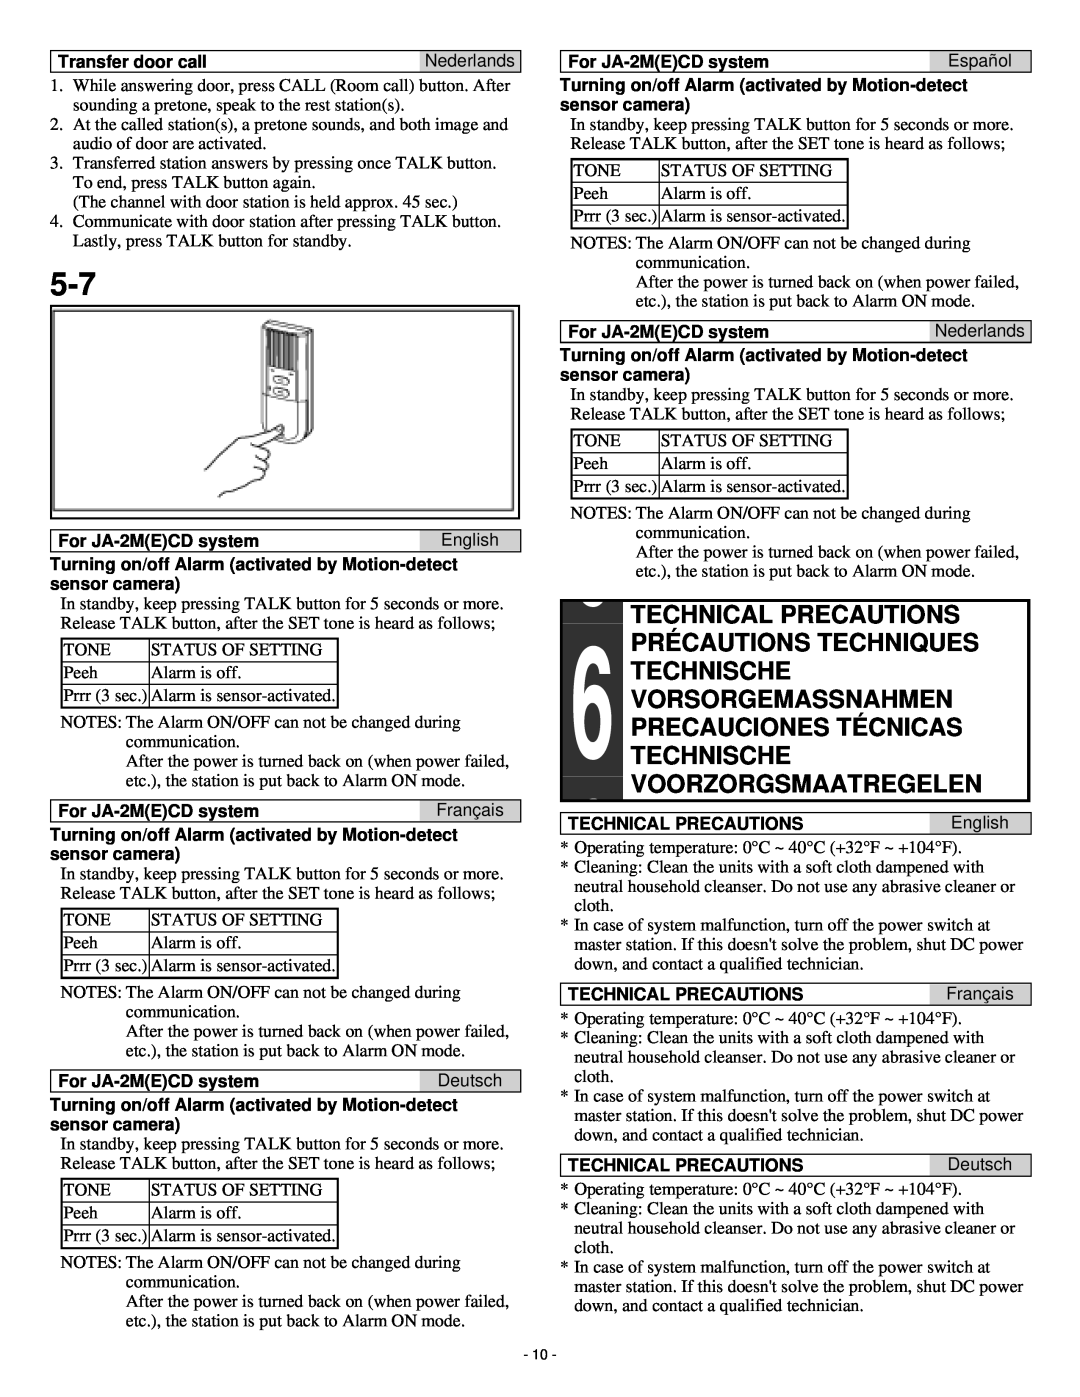 Aiphone ja-2sd operation manual Technical Precautions Précautions Techniques Technische, Voorzorgsmaatregelen 